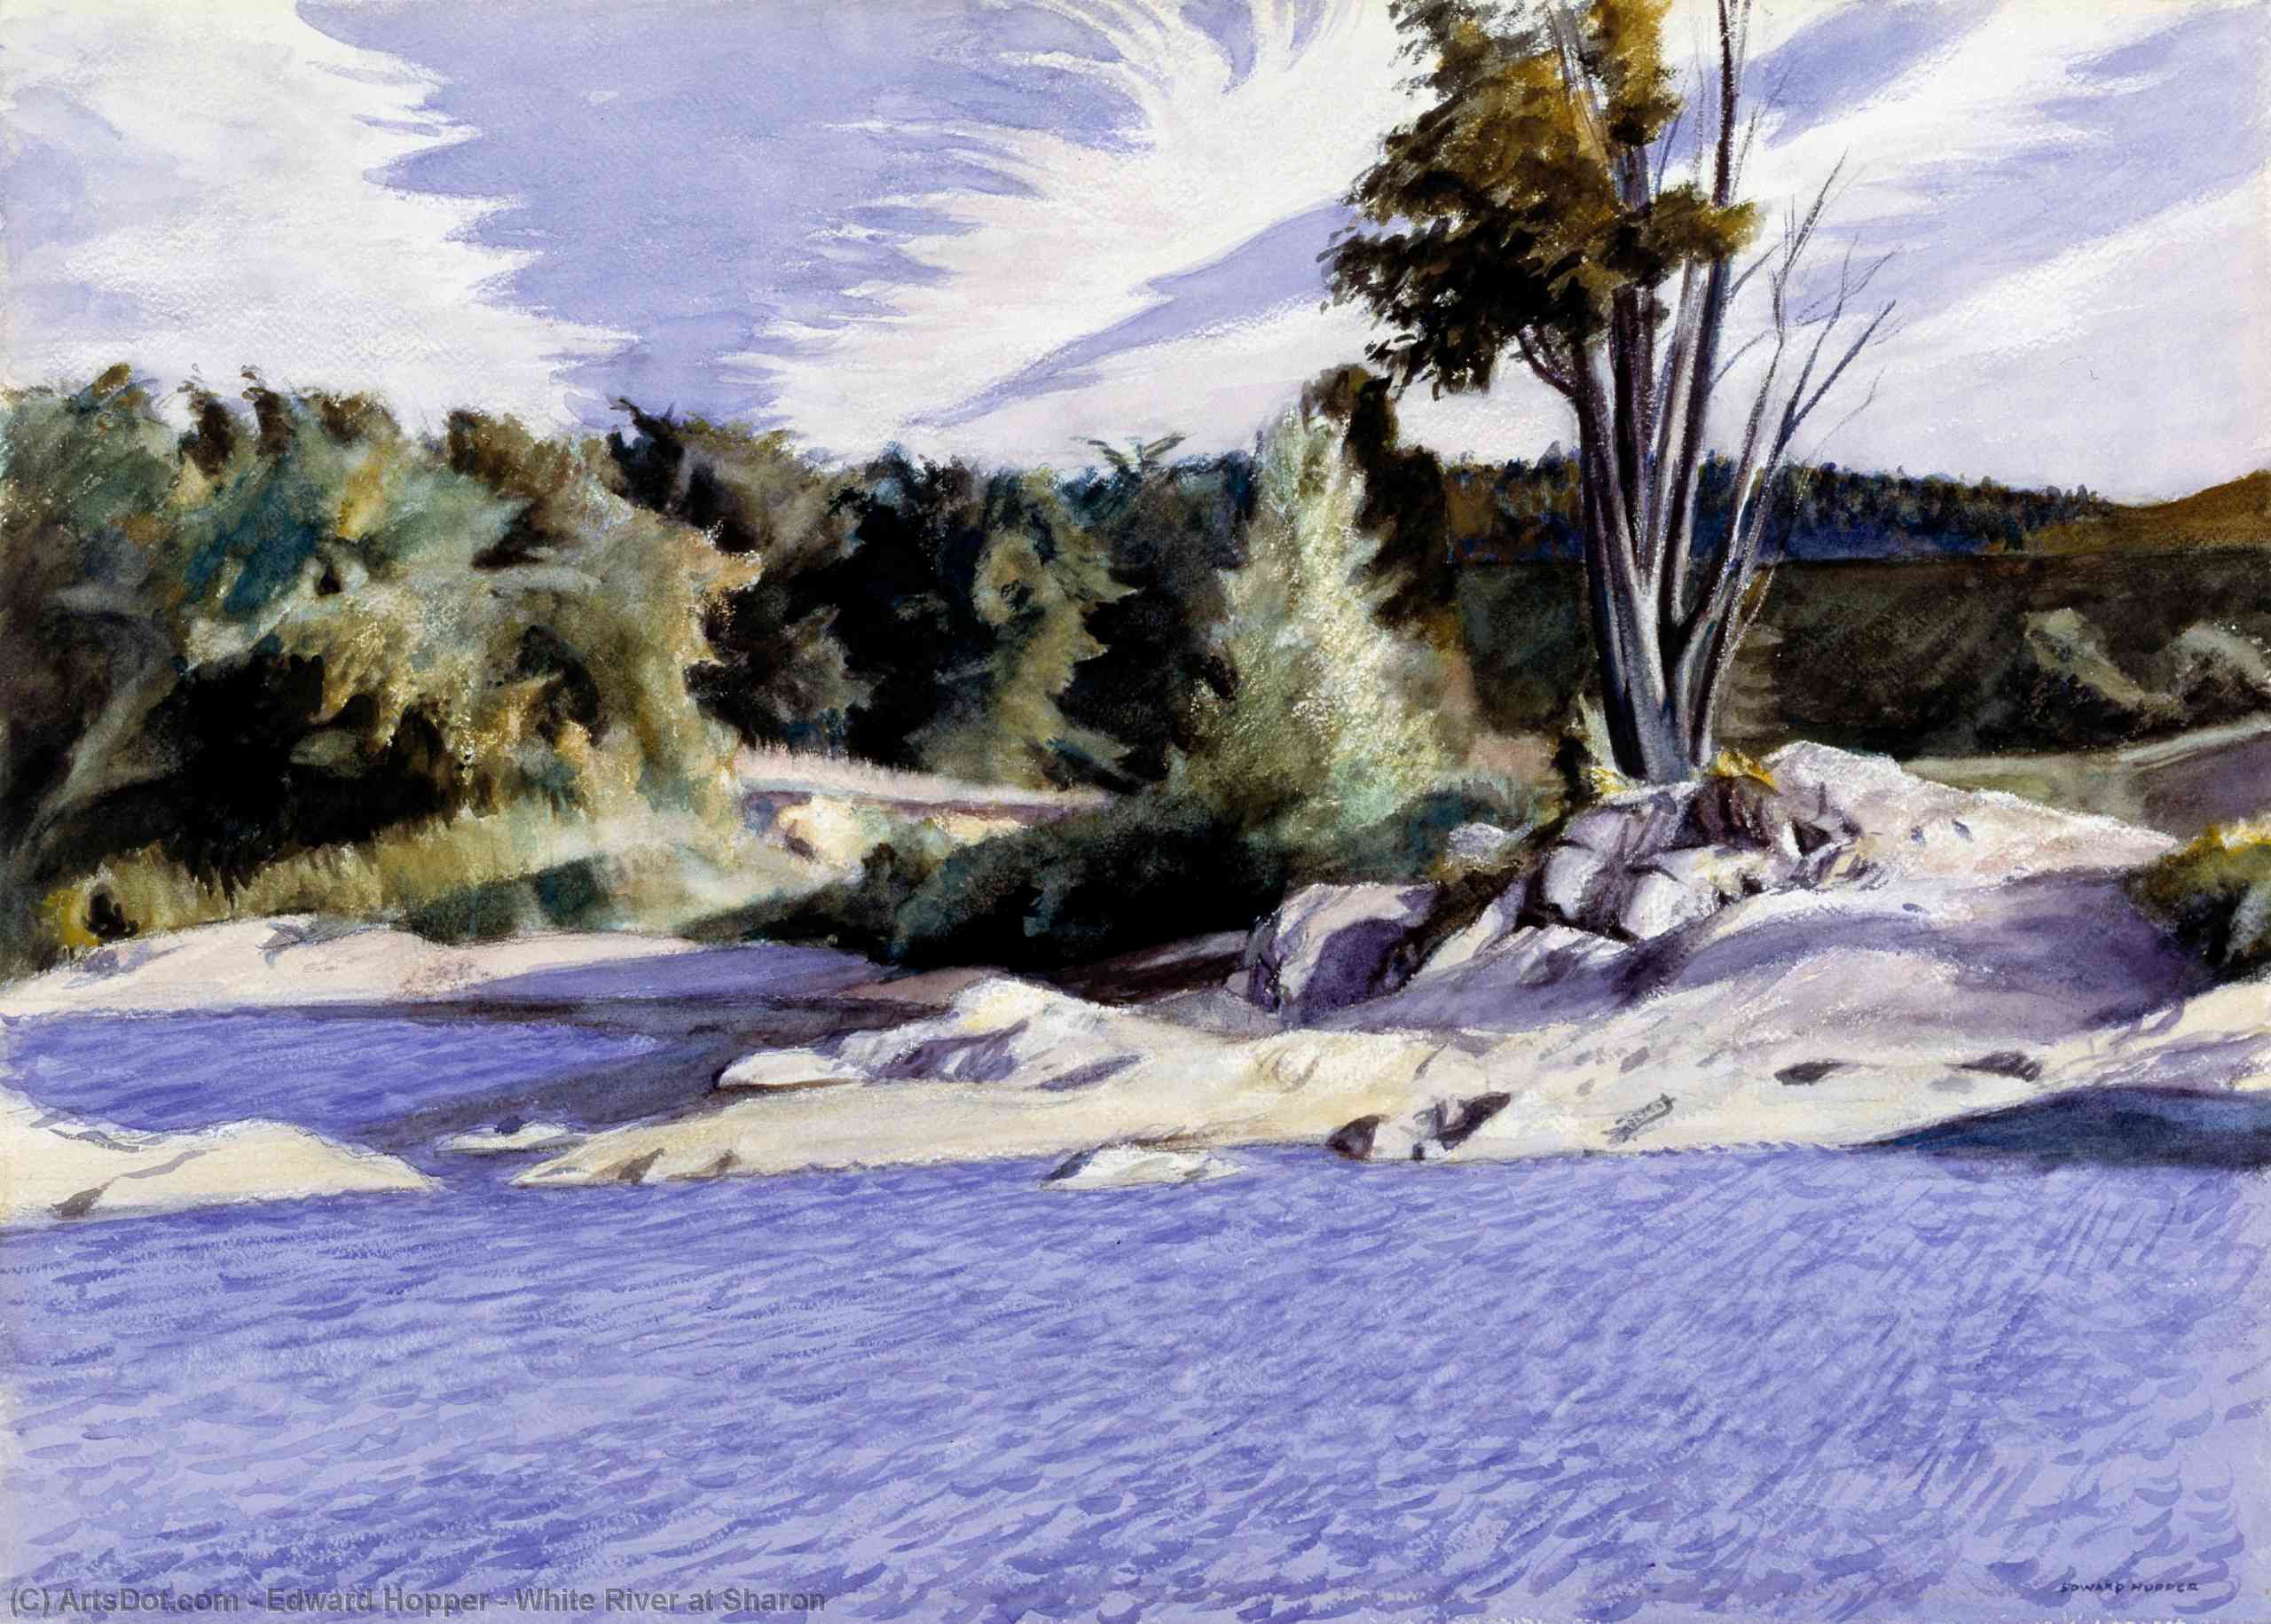 WikiOO.org - Enciclopédia das Belas Artes - Pintura, Arte por Edward Hopper - White River at Sharon